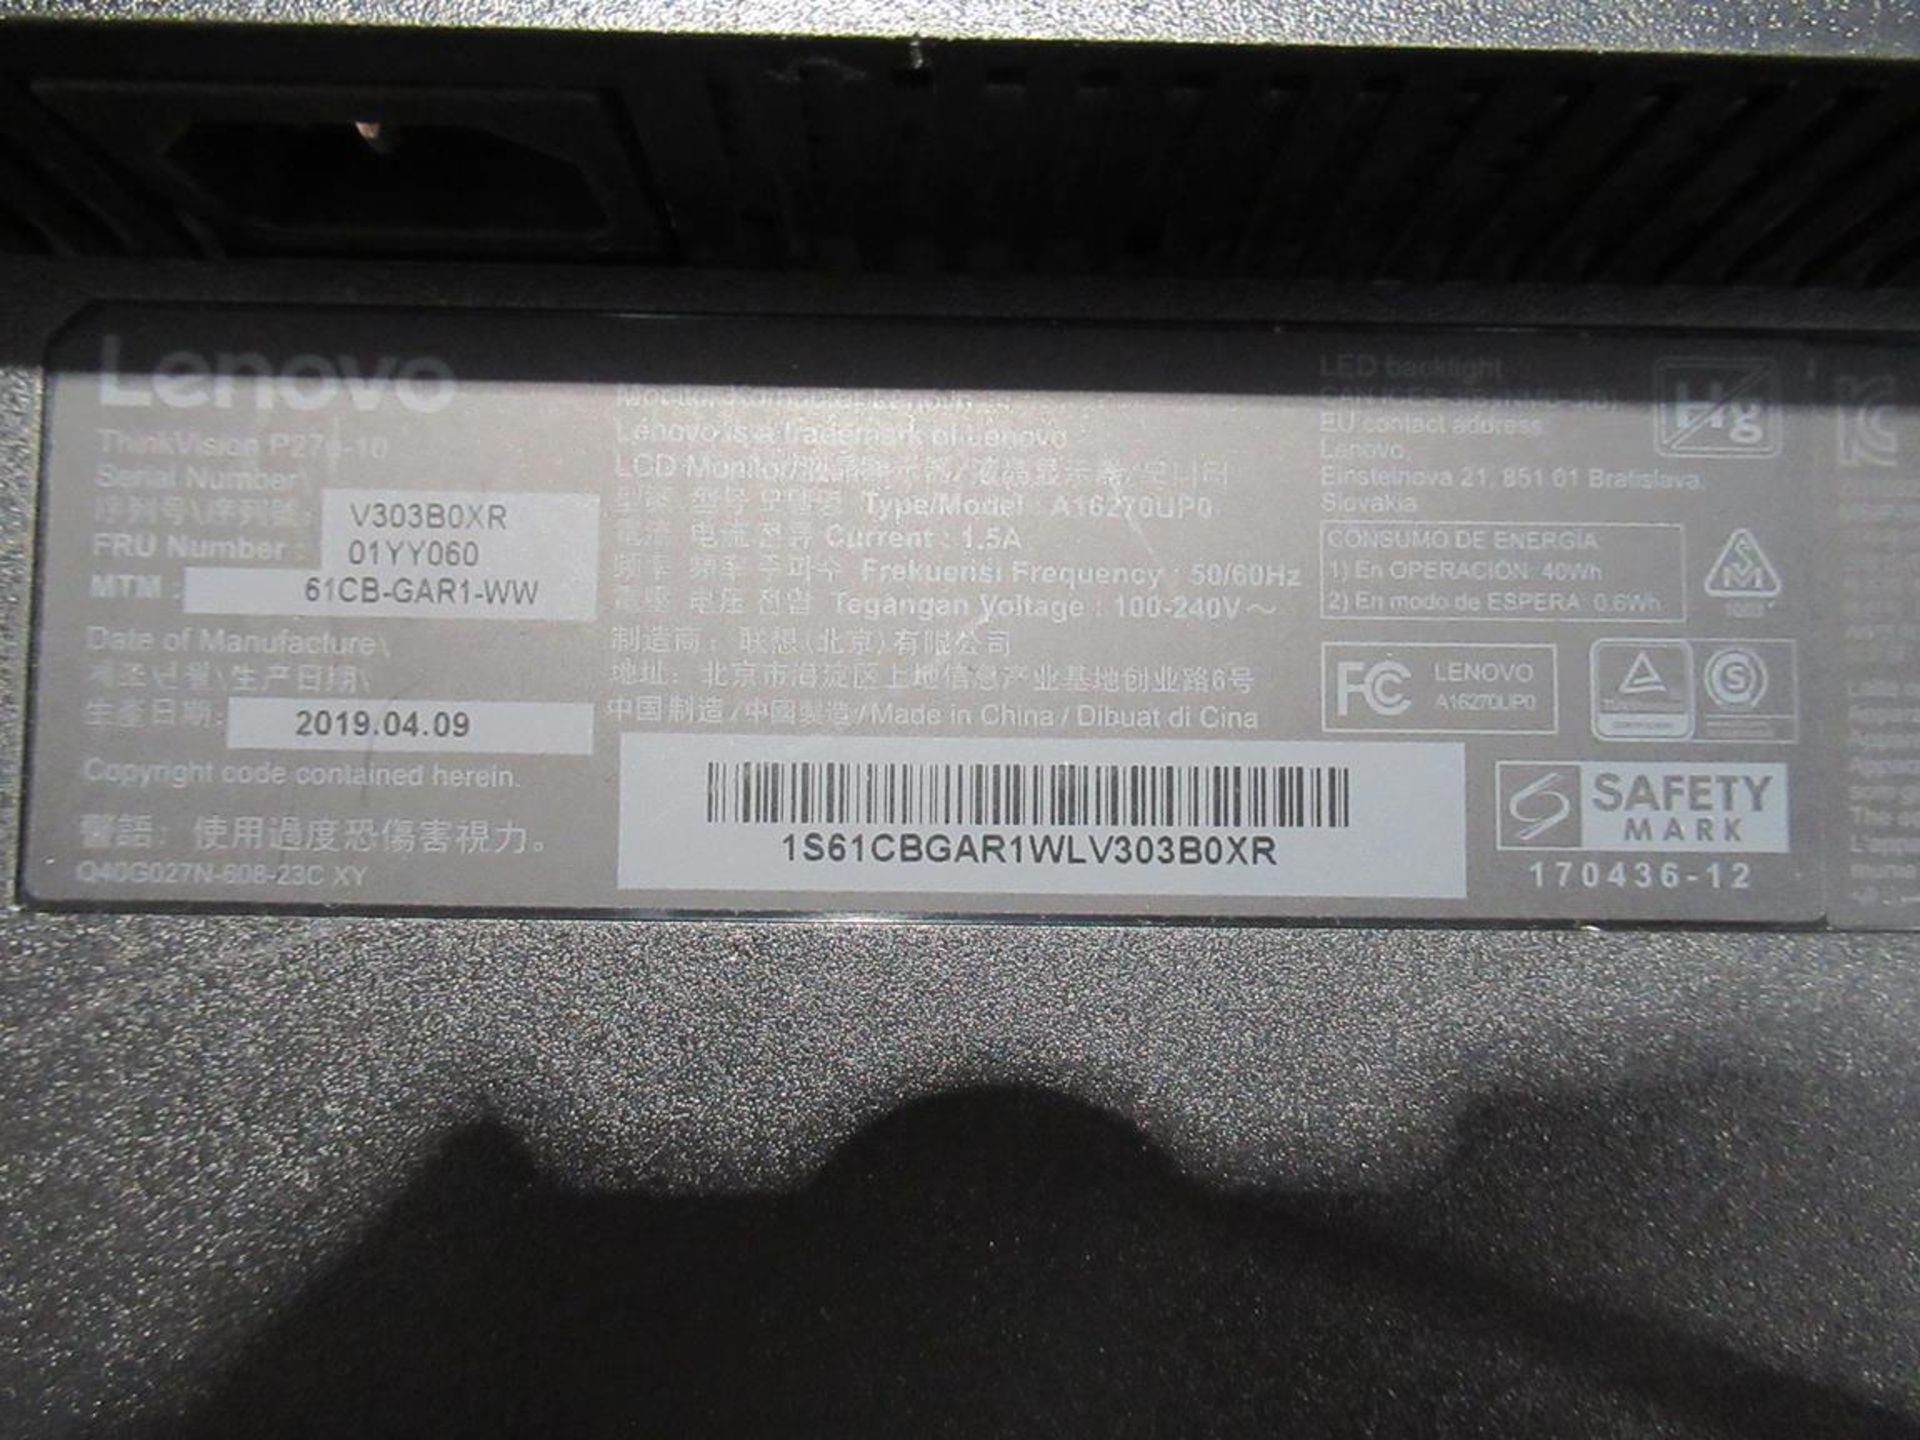 9x (no.) Lenovo, Thinkvision T27P LCD monitor - Image 7 of 14